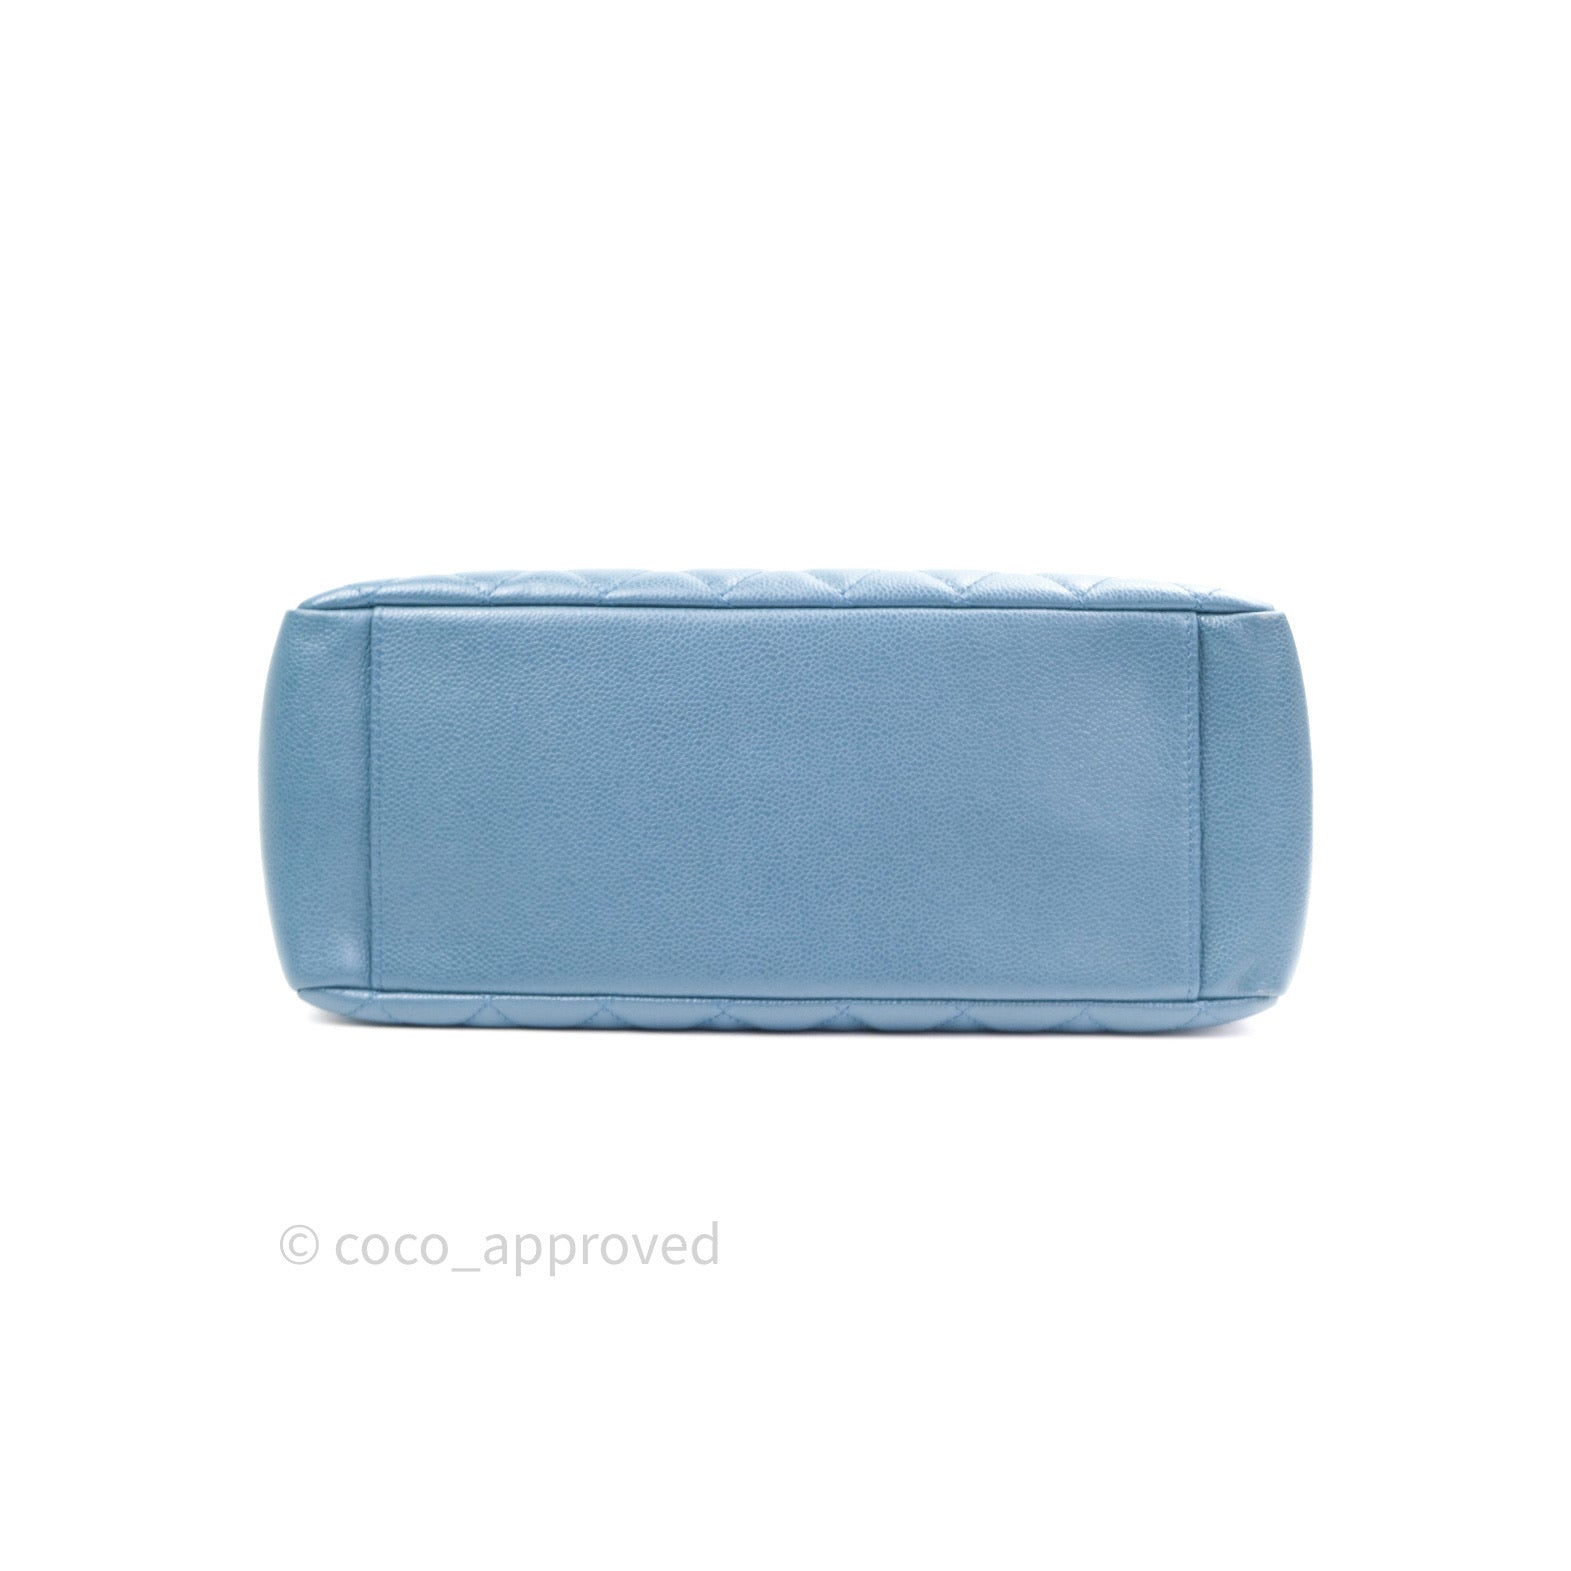 Chanel 19 Shopping Tote - Blue Totes, Handbags - CHA671353